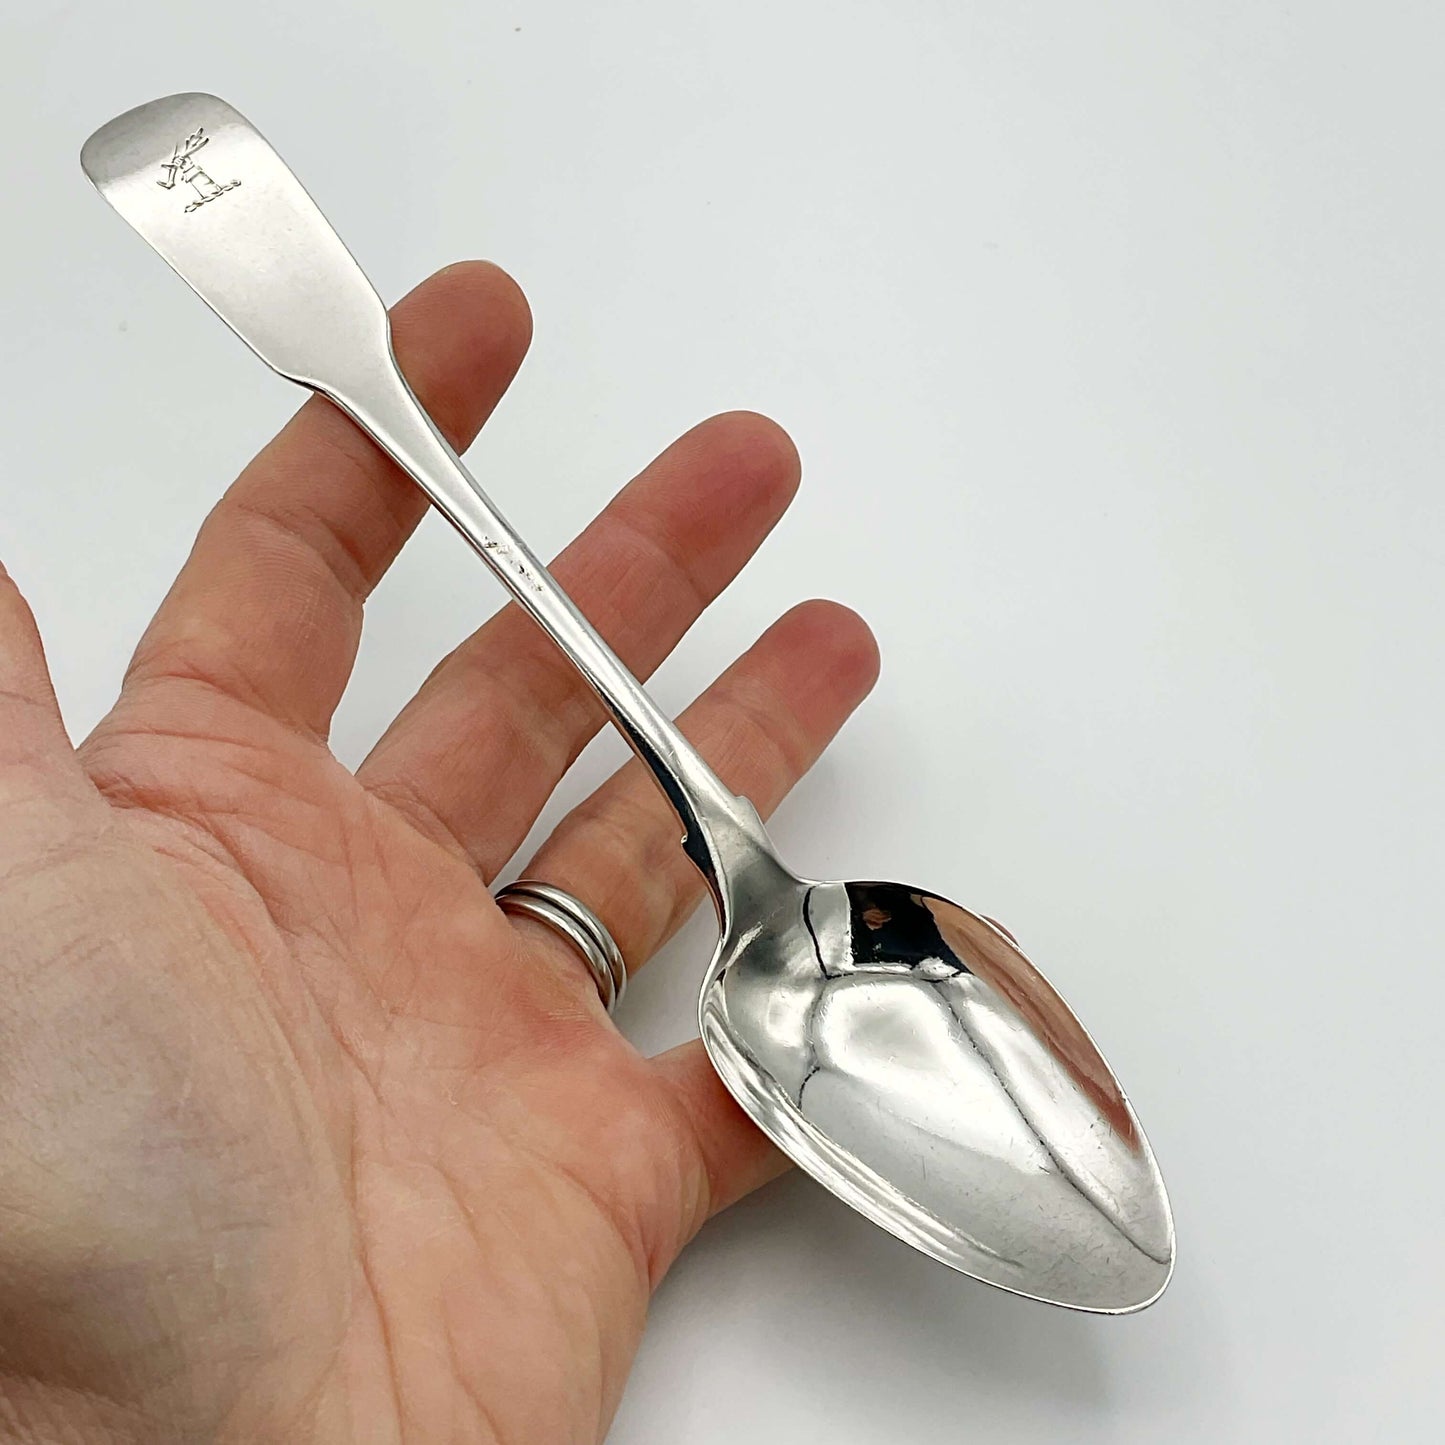 Silver dessert spoon held in a hand